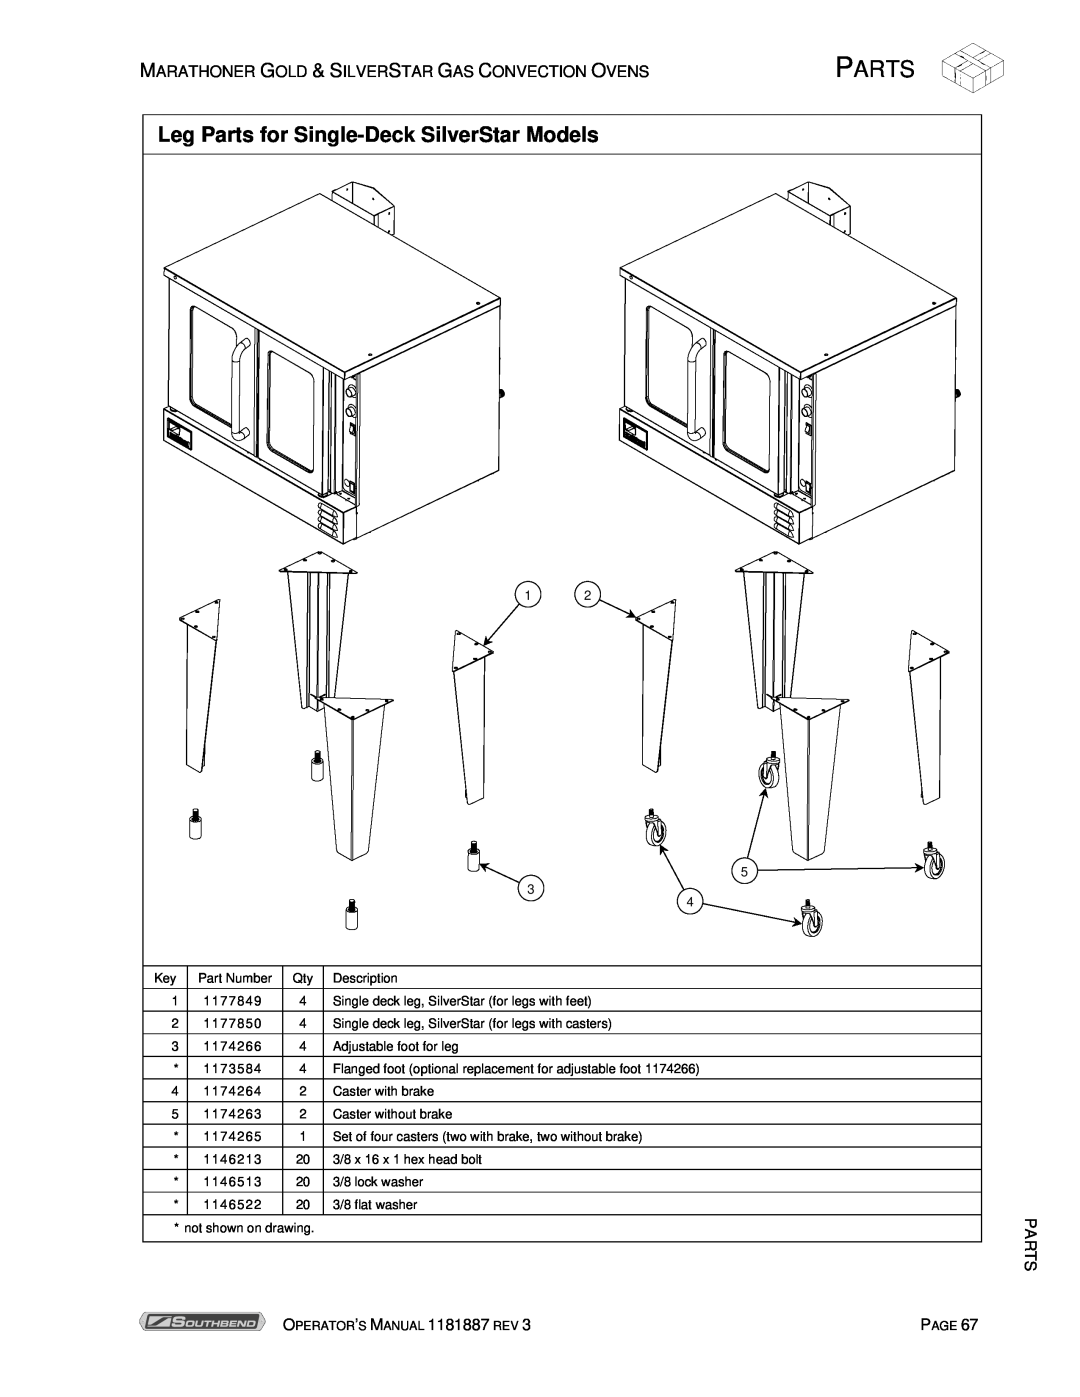 Southbend Marathoner Leg Parts for Single-Deck SilverStar Models, not shown on drawing, 3/8 lock washer 3/8 flat washer 